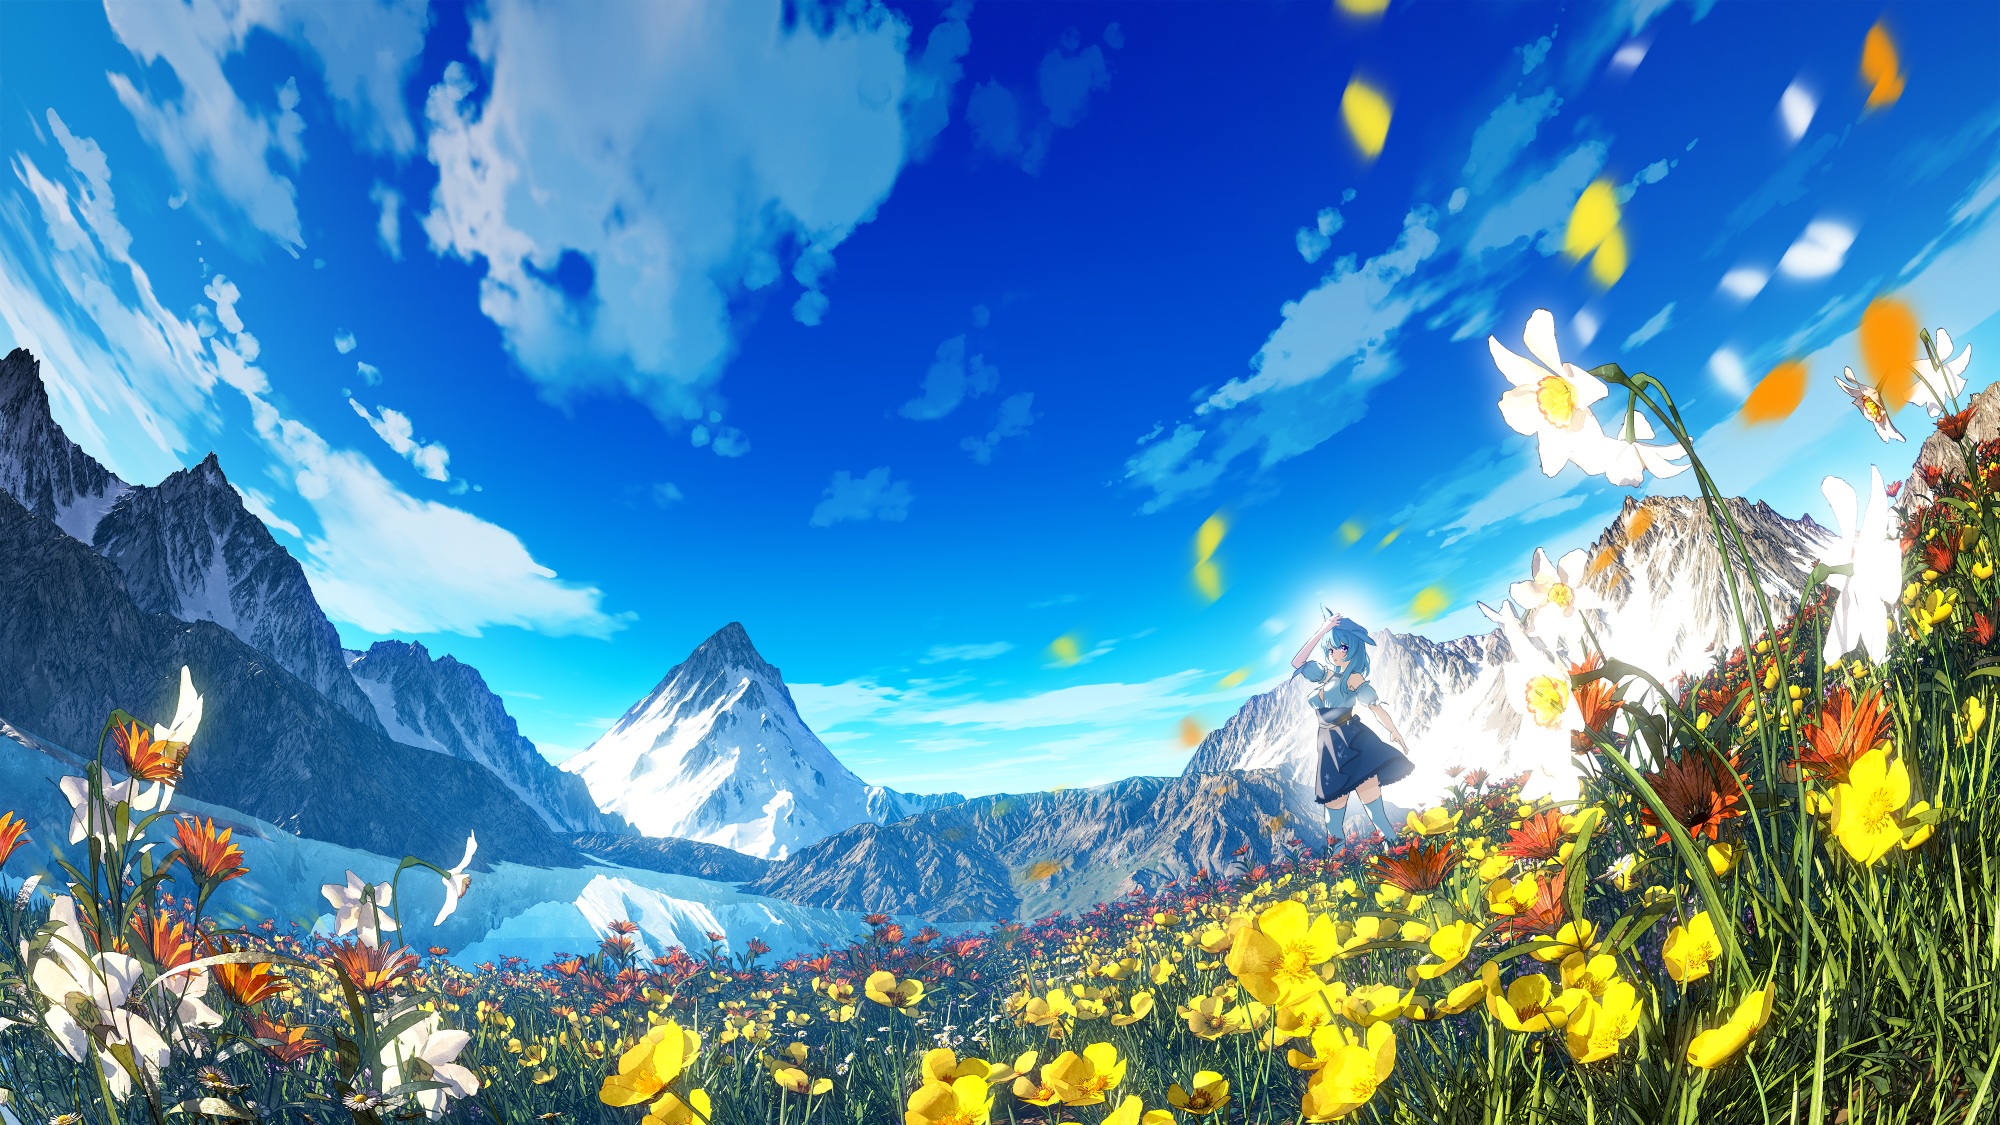 Anime 2000x1125 anime girls landscape flowers knee high socks petals mountains sky clouds grass Hachio81 animal ears